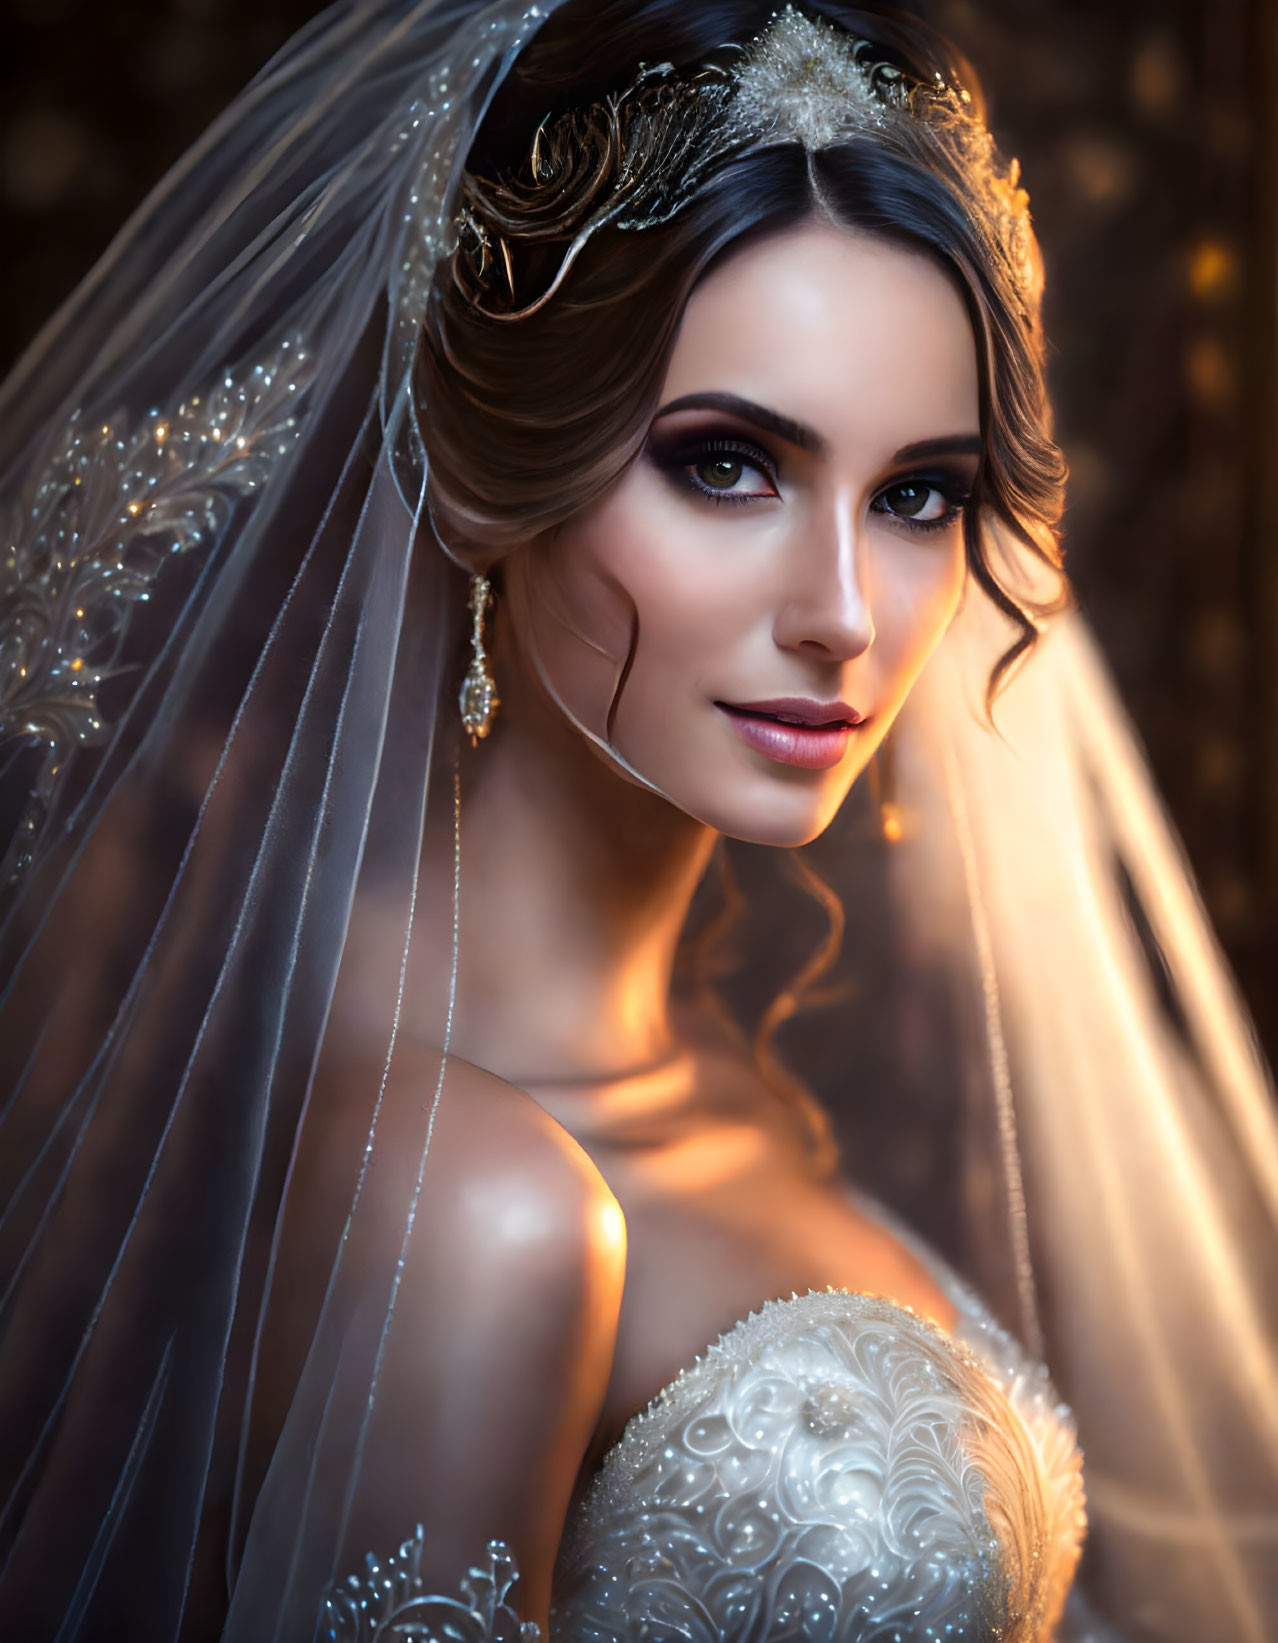 Translucent Veil, Tiara, and Embellished Gown Bride Portrait